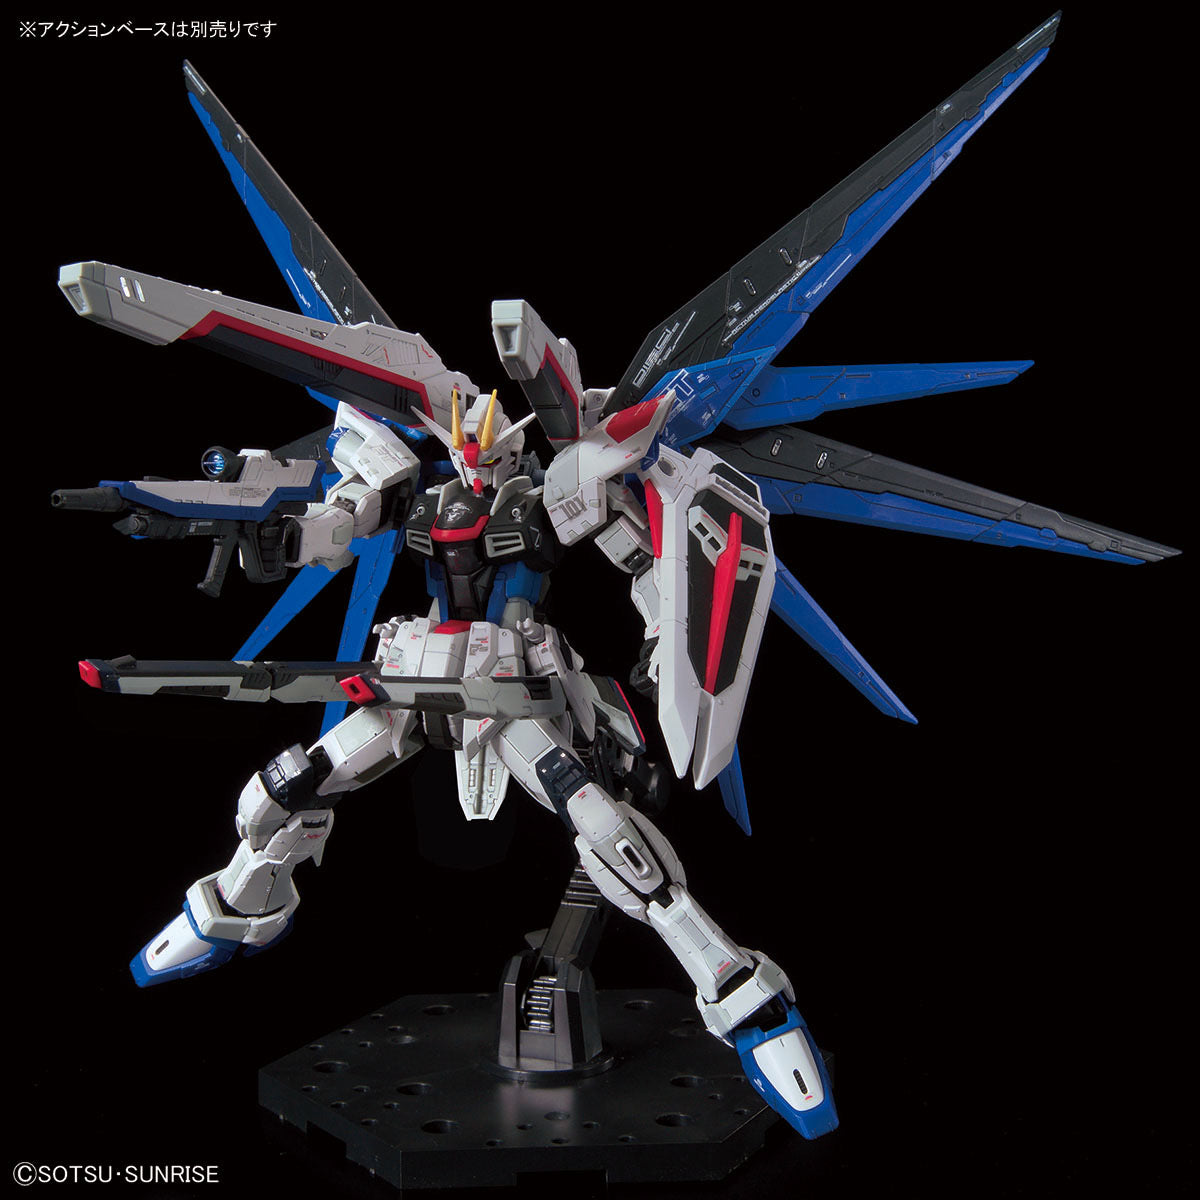 Gundam Base Limited RG 1/144 ZGMF-X10A Freedom Gundam Ver. GCP (February & March Ship Date)